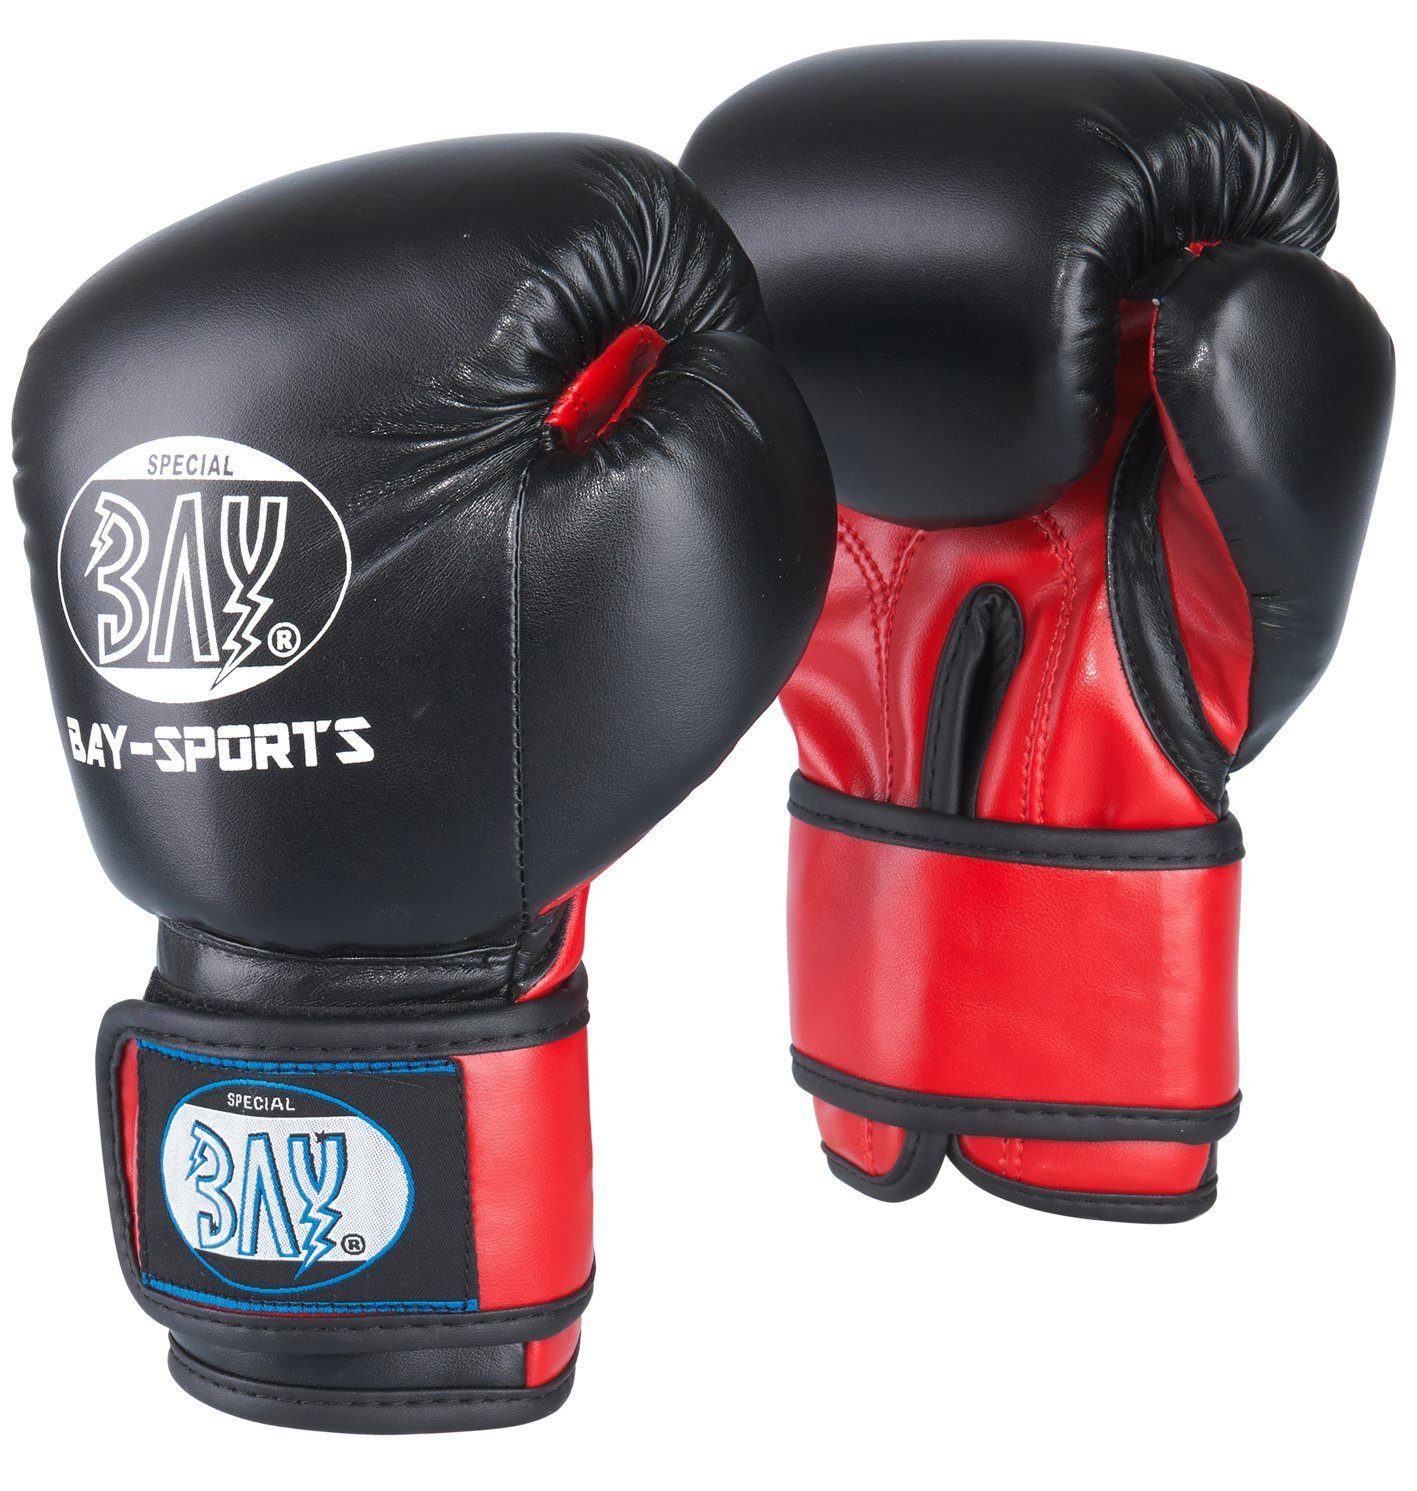 BAY-Sports Kickboxen schwarz/rot MiniFighter Kinderboxhandschuhe Boxen Boxhandschuhe